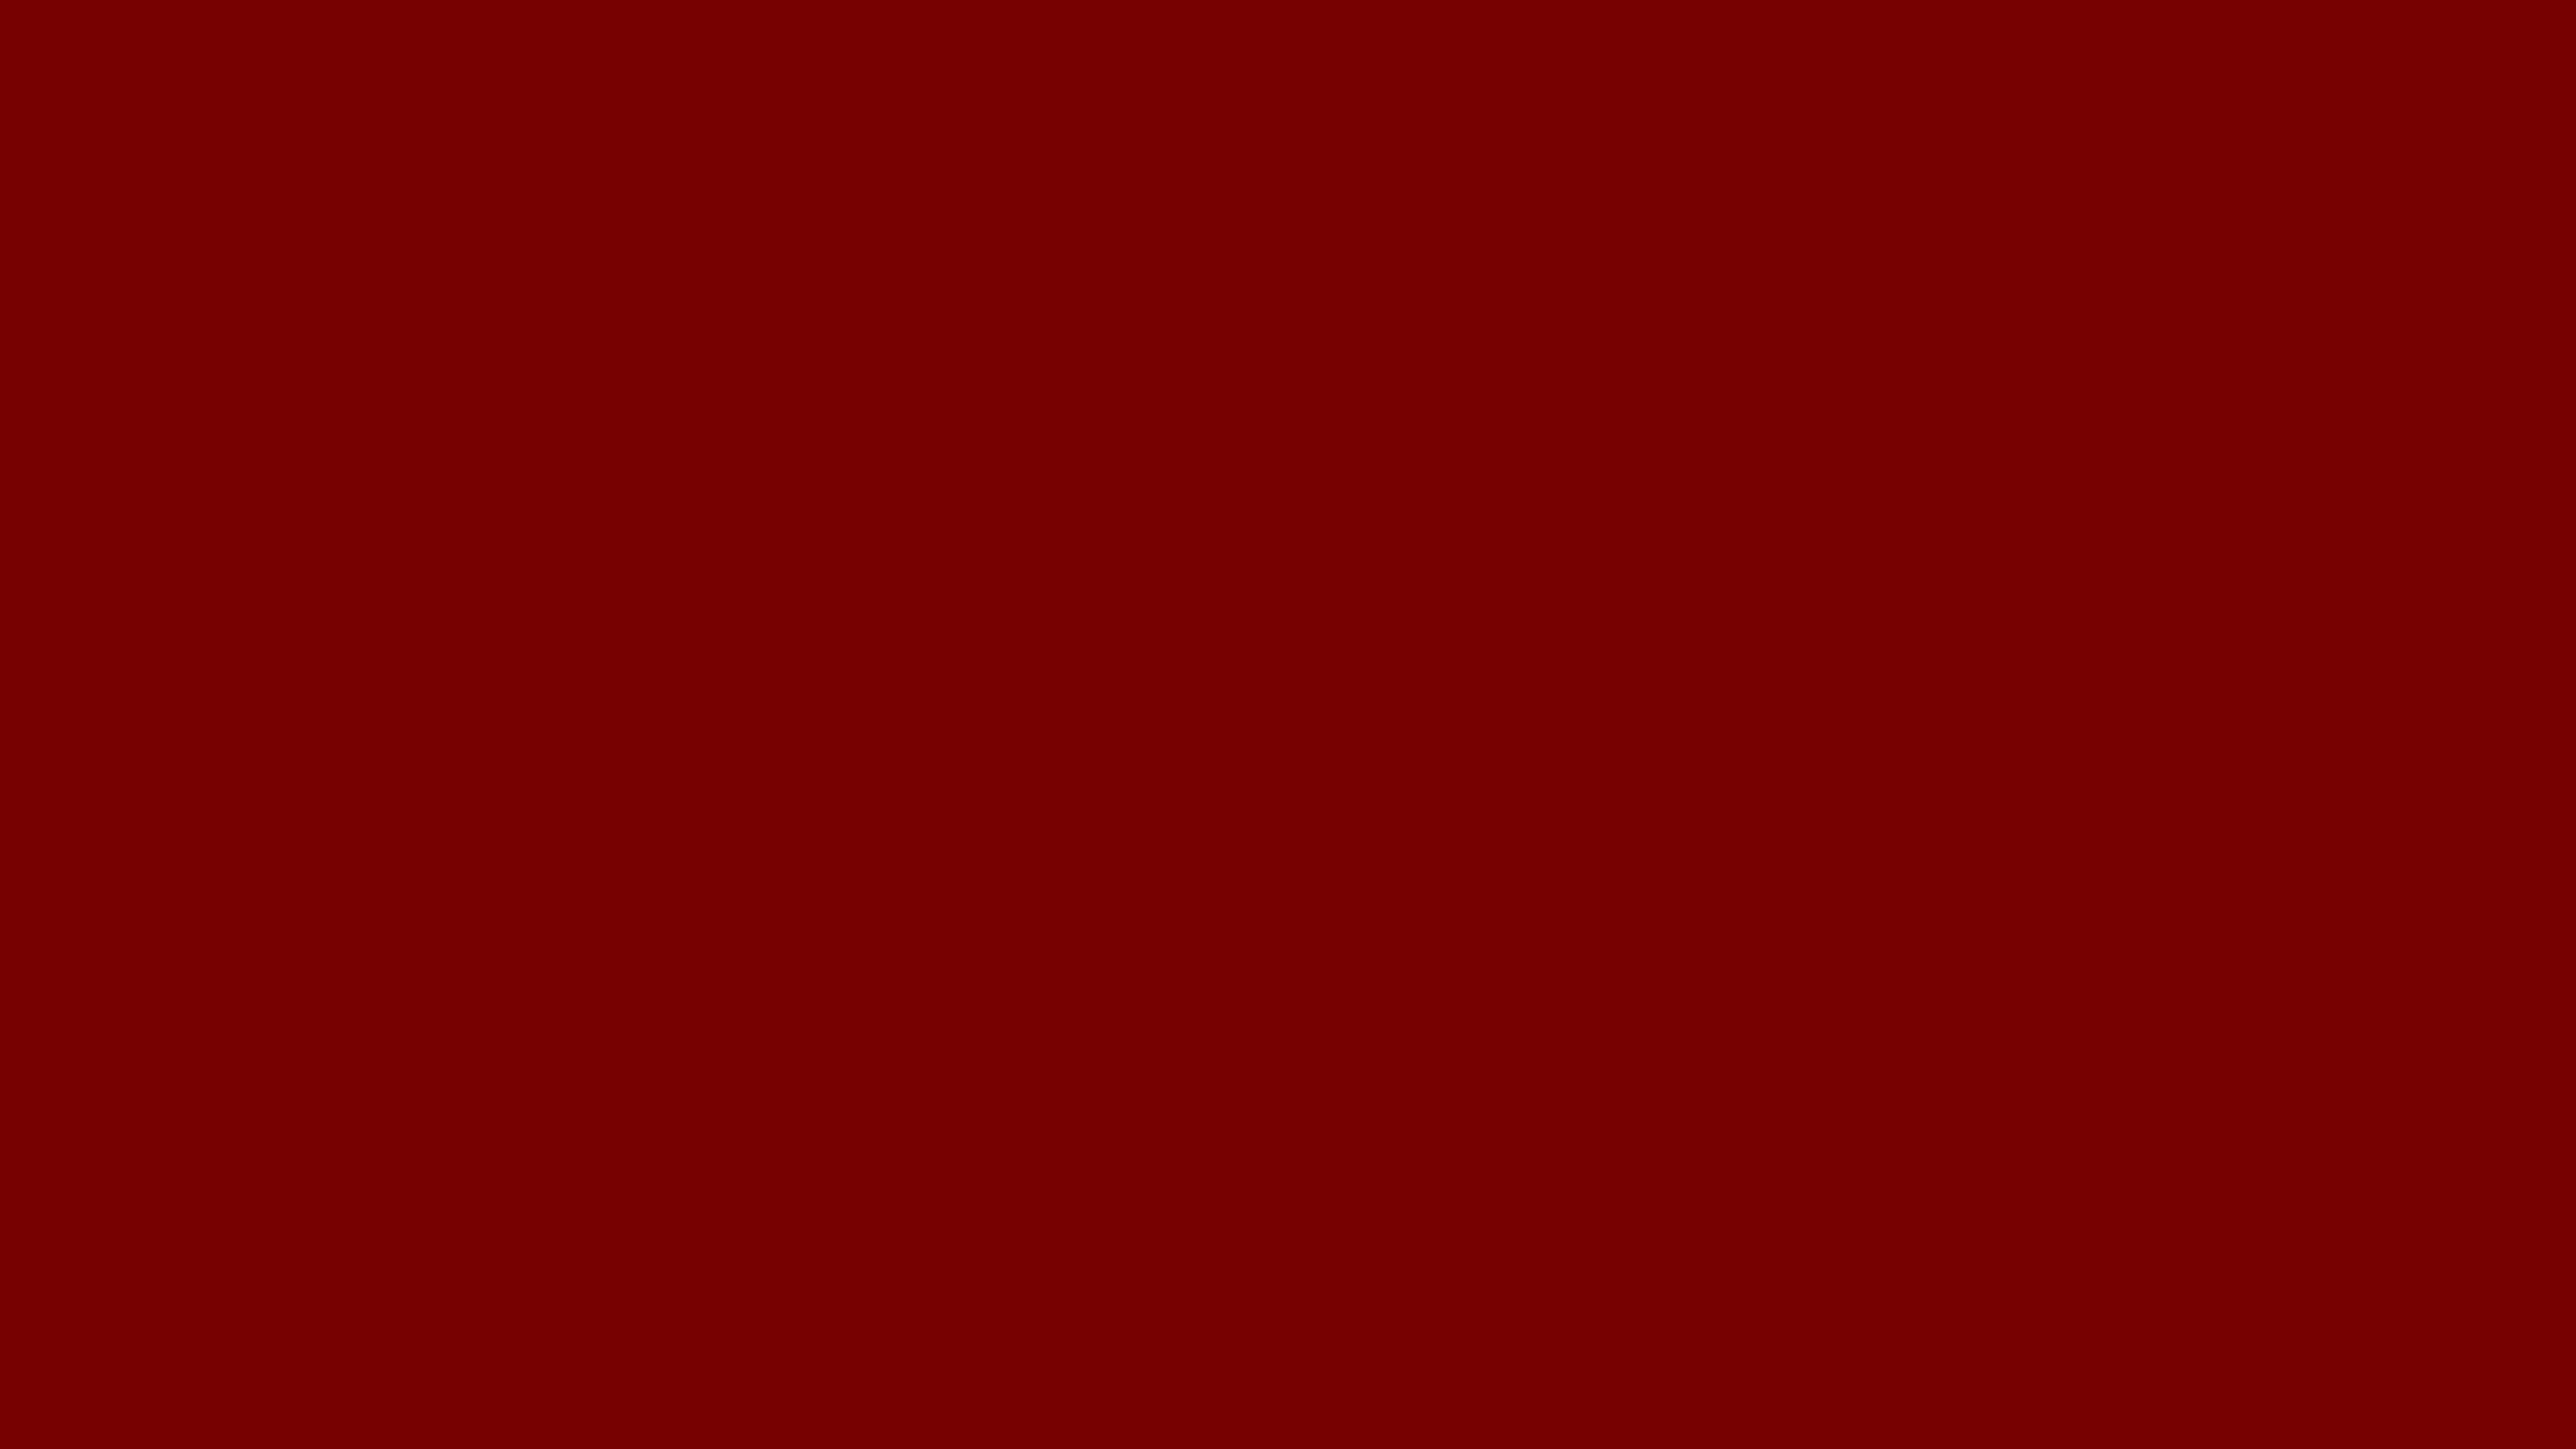 Blood Solid Color Background Image | Free Image Generator